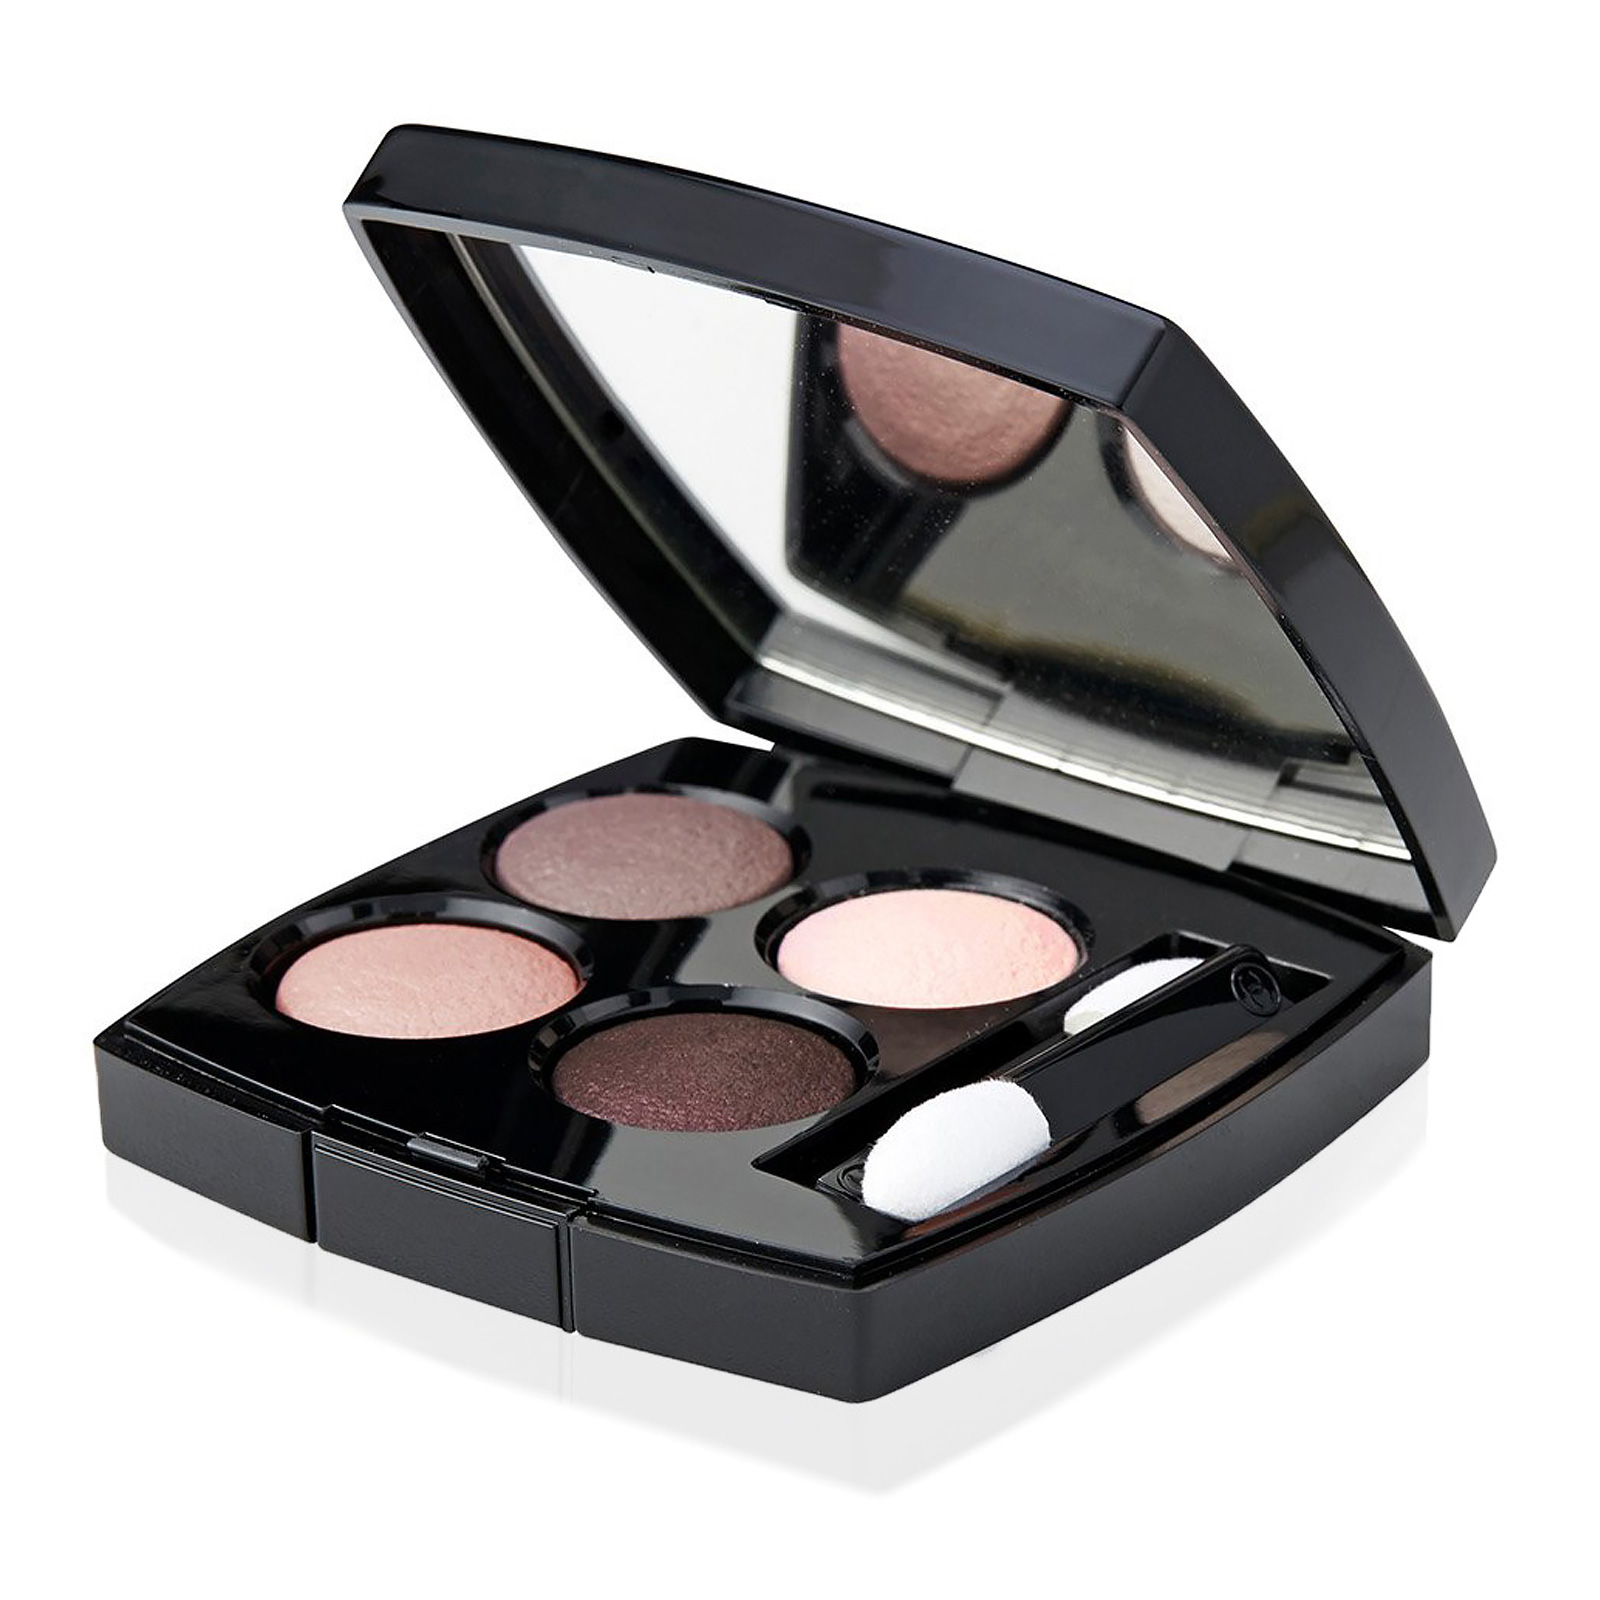 Chanel Les 4 Ombres Multi-Effect Quadra Eyeshadow2 g 0.07 oz AKB Beauty